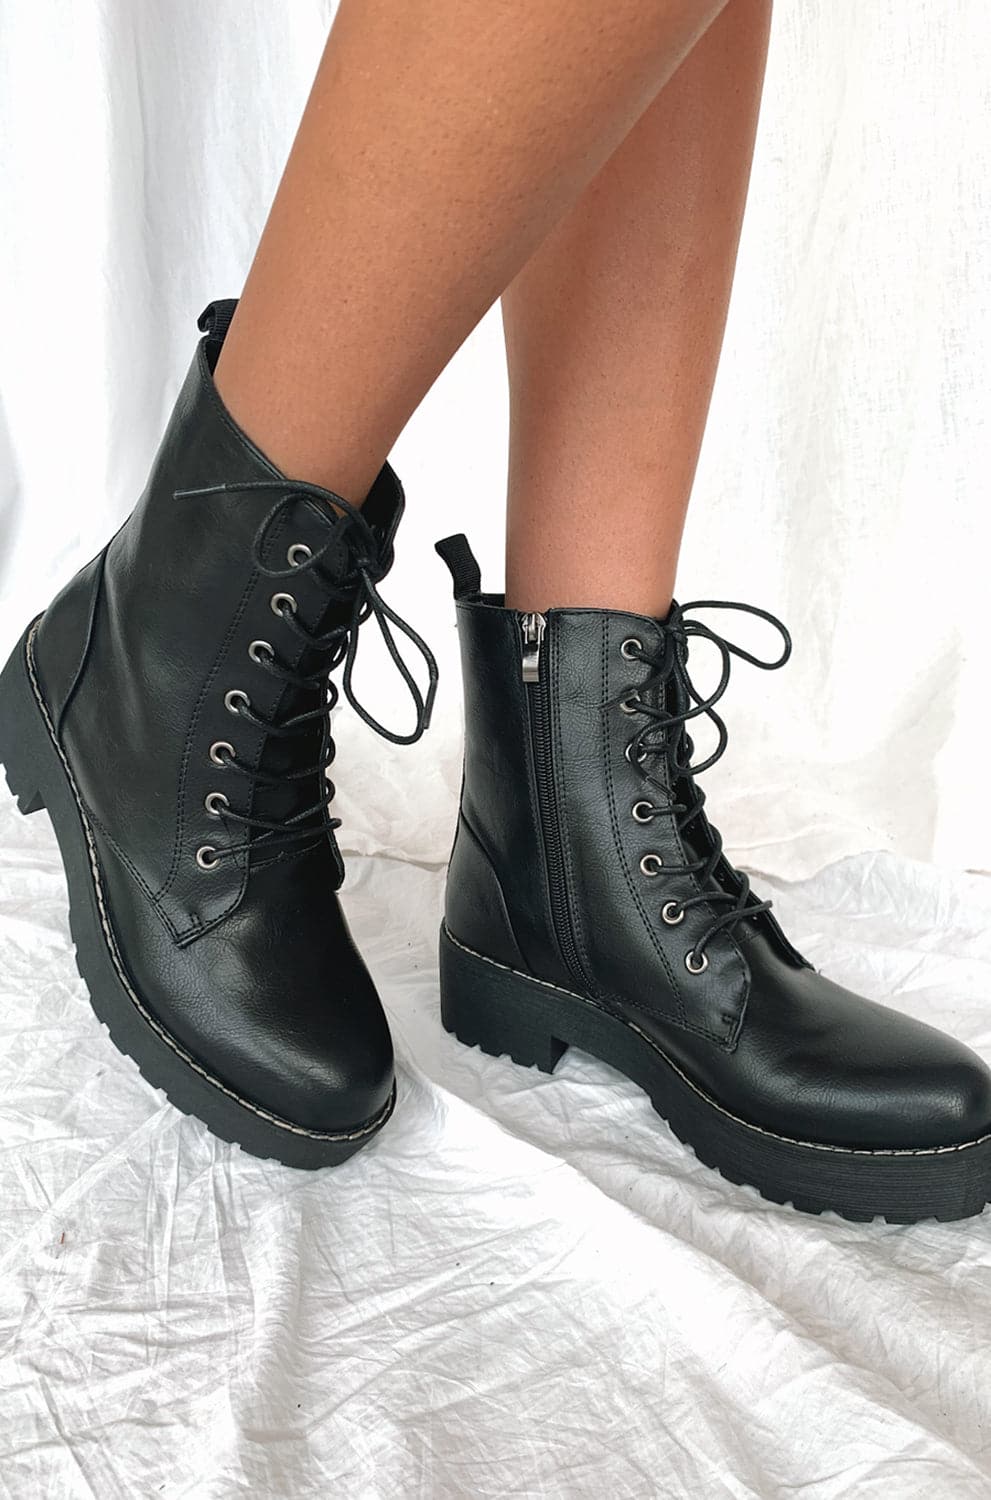 black combat boots with zipper